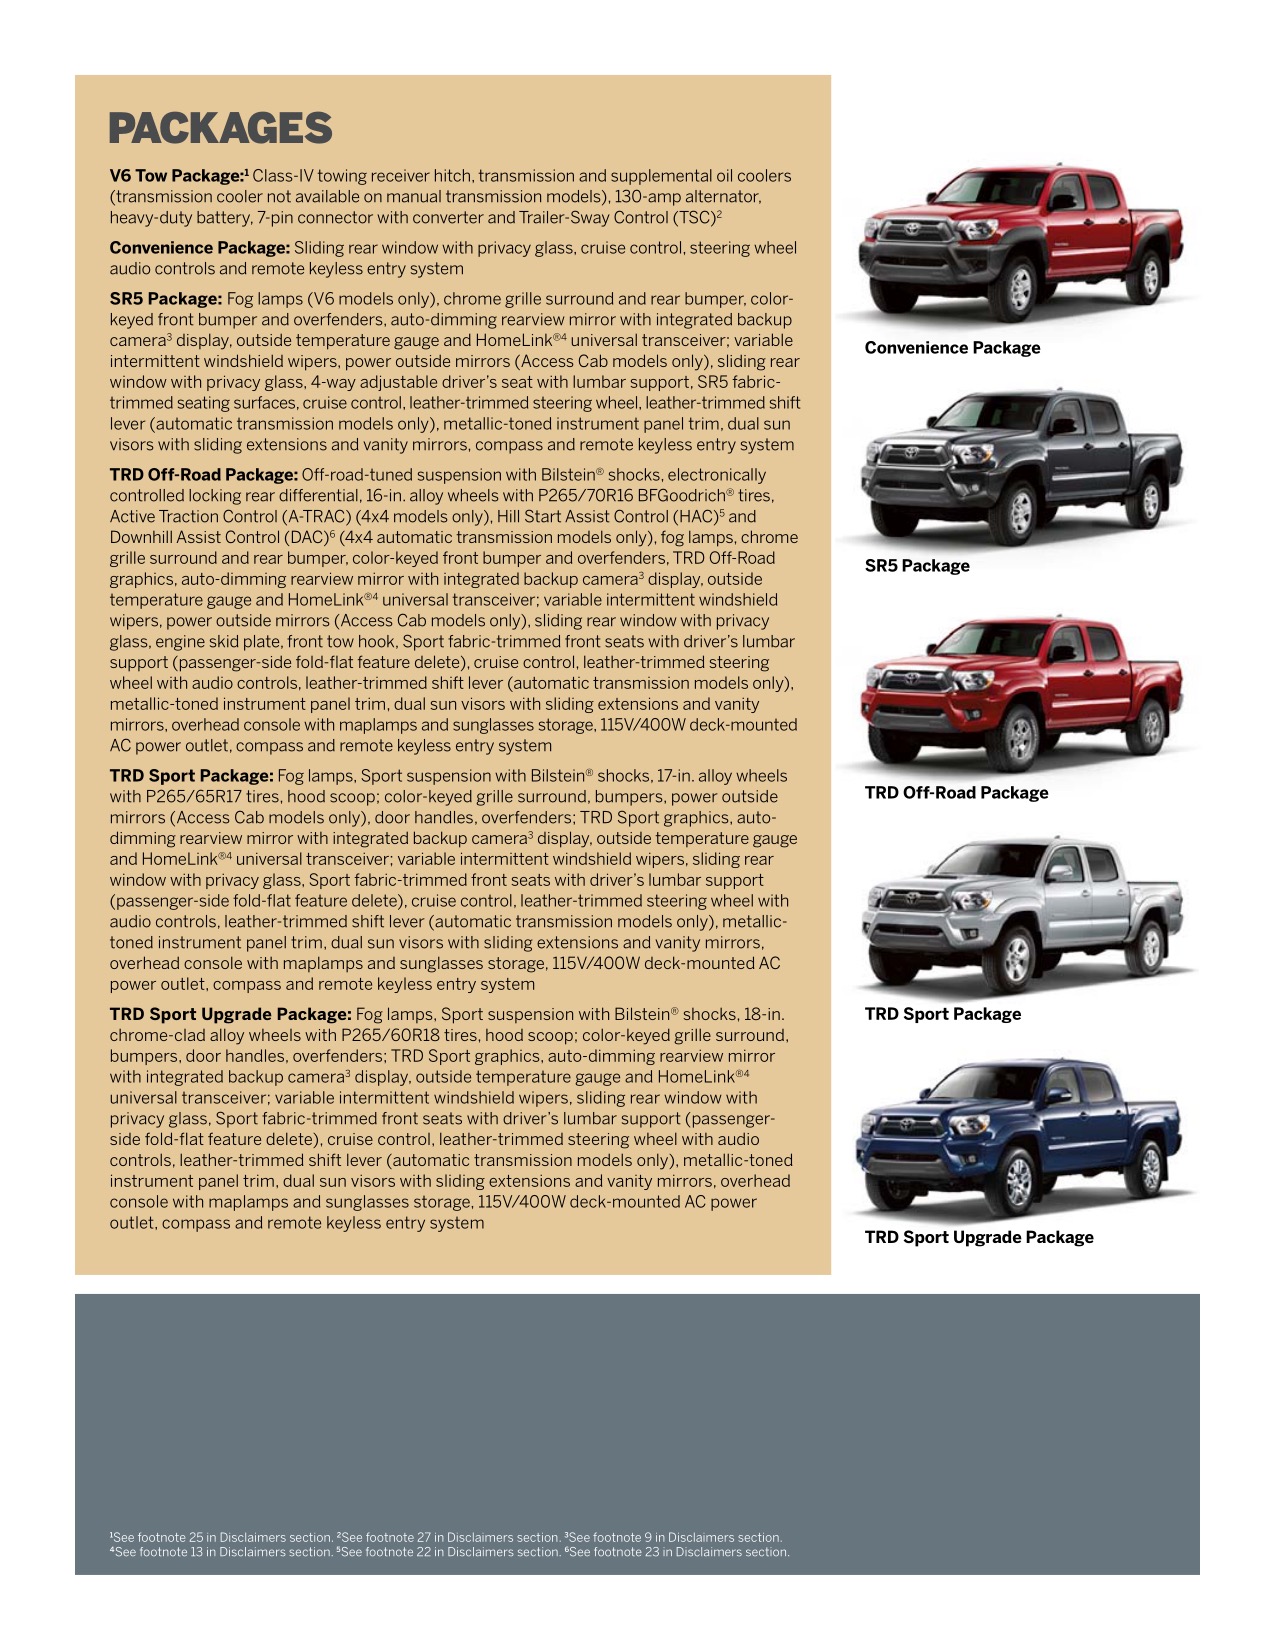 2012 Toyota Tacoma Brochure Page 1